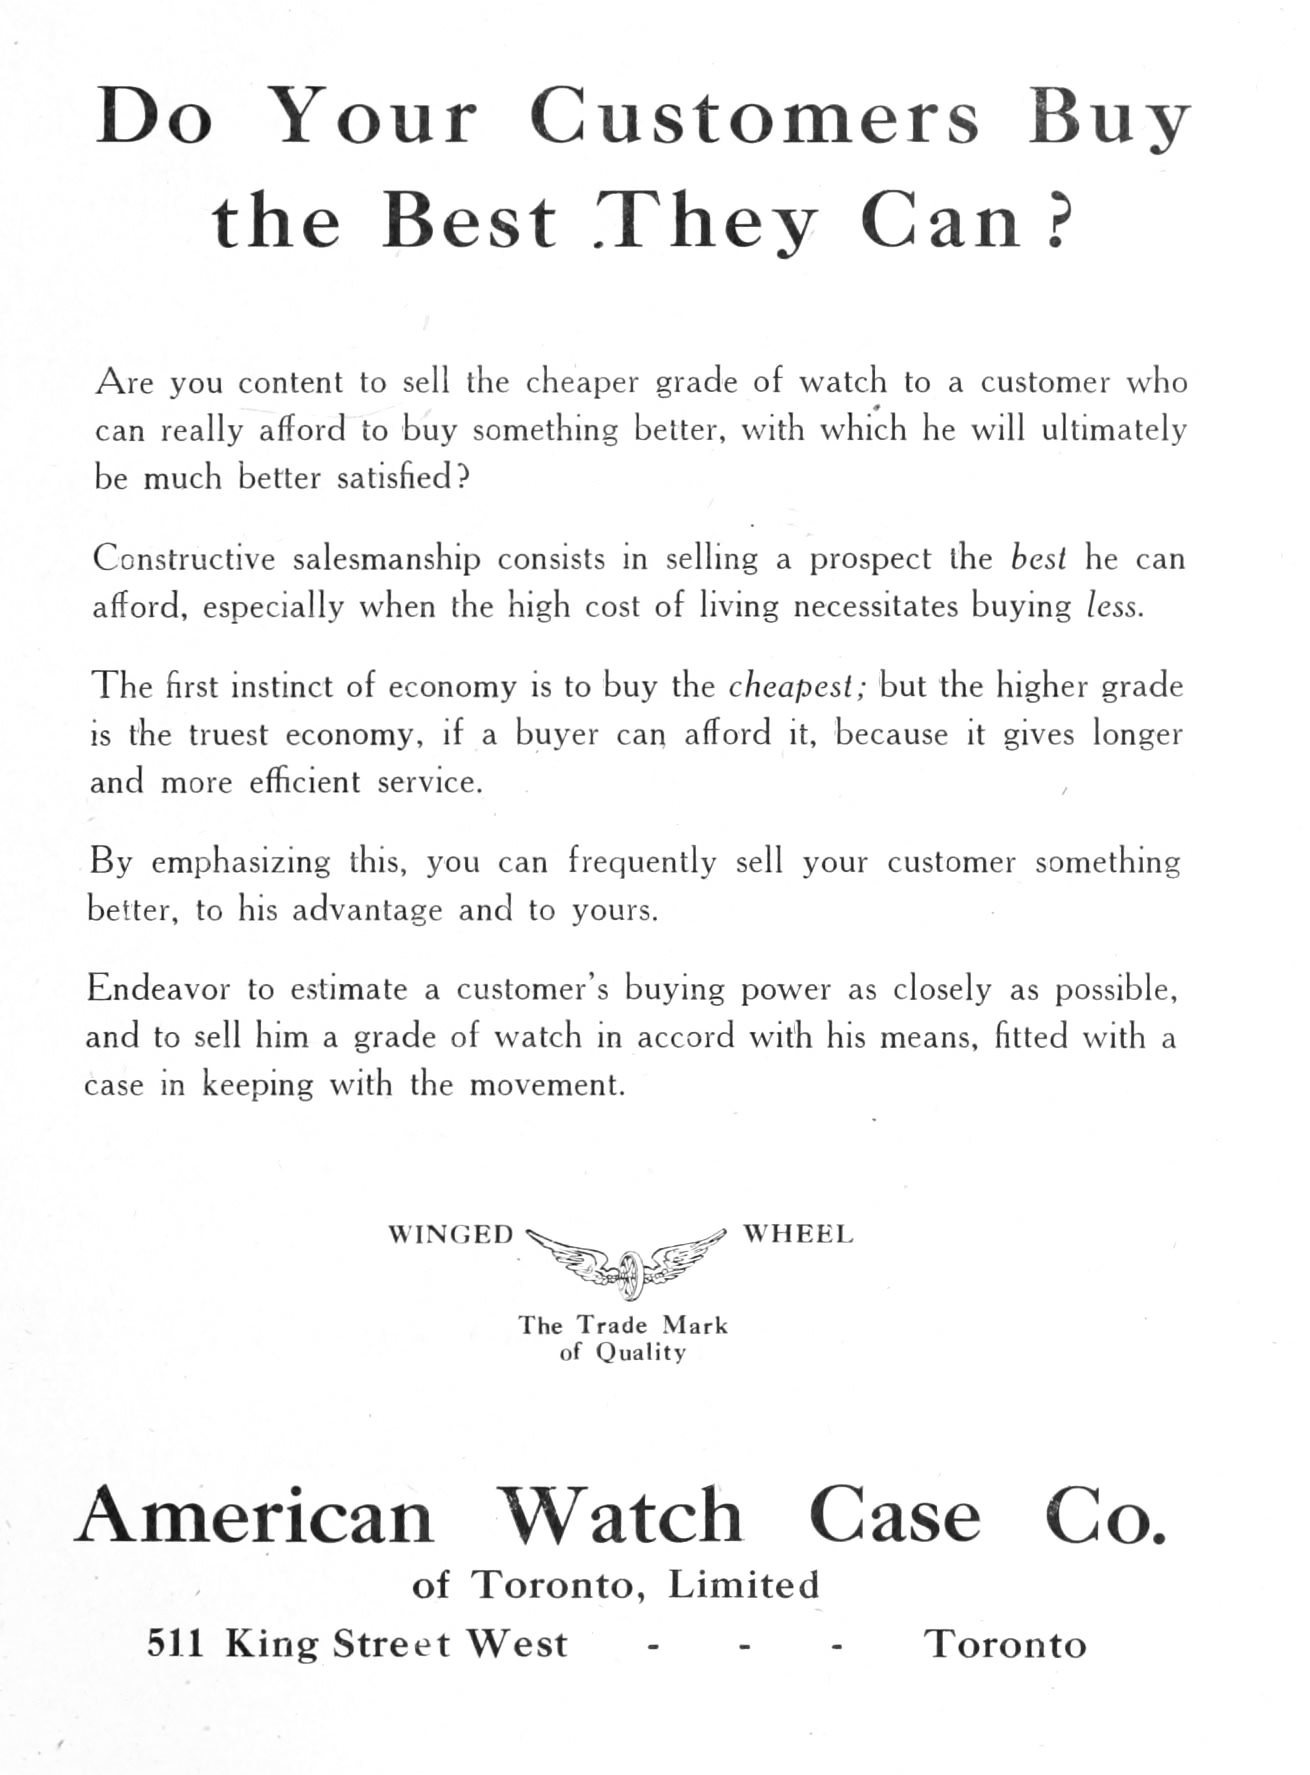 American Watch 1920 21.jpg